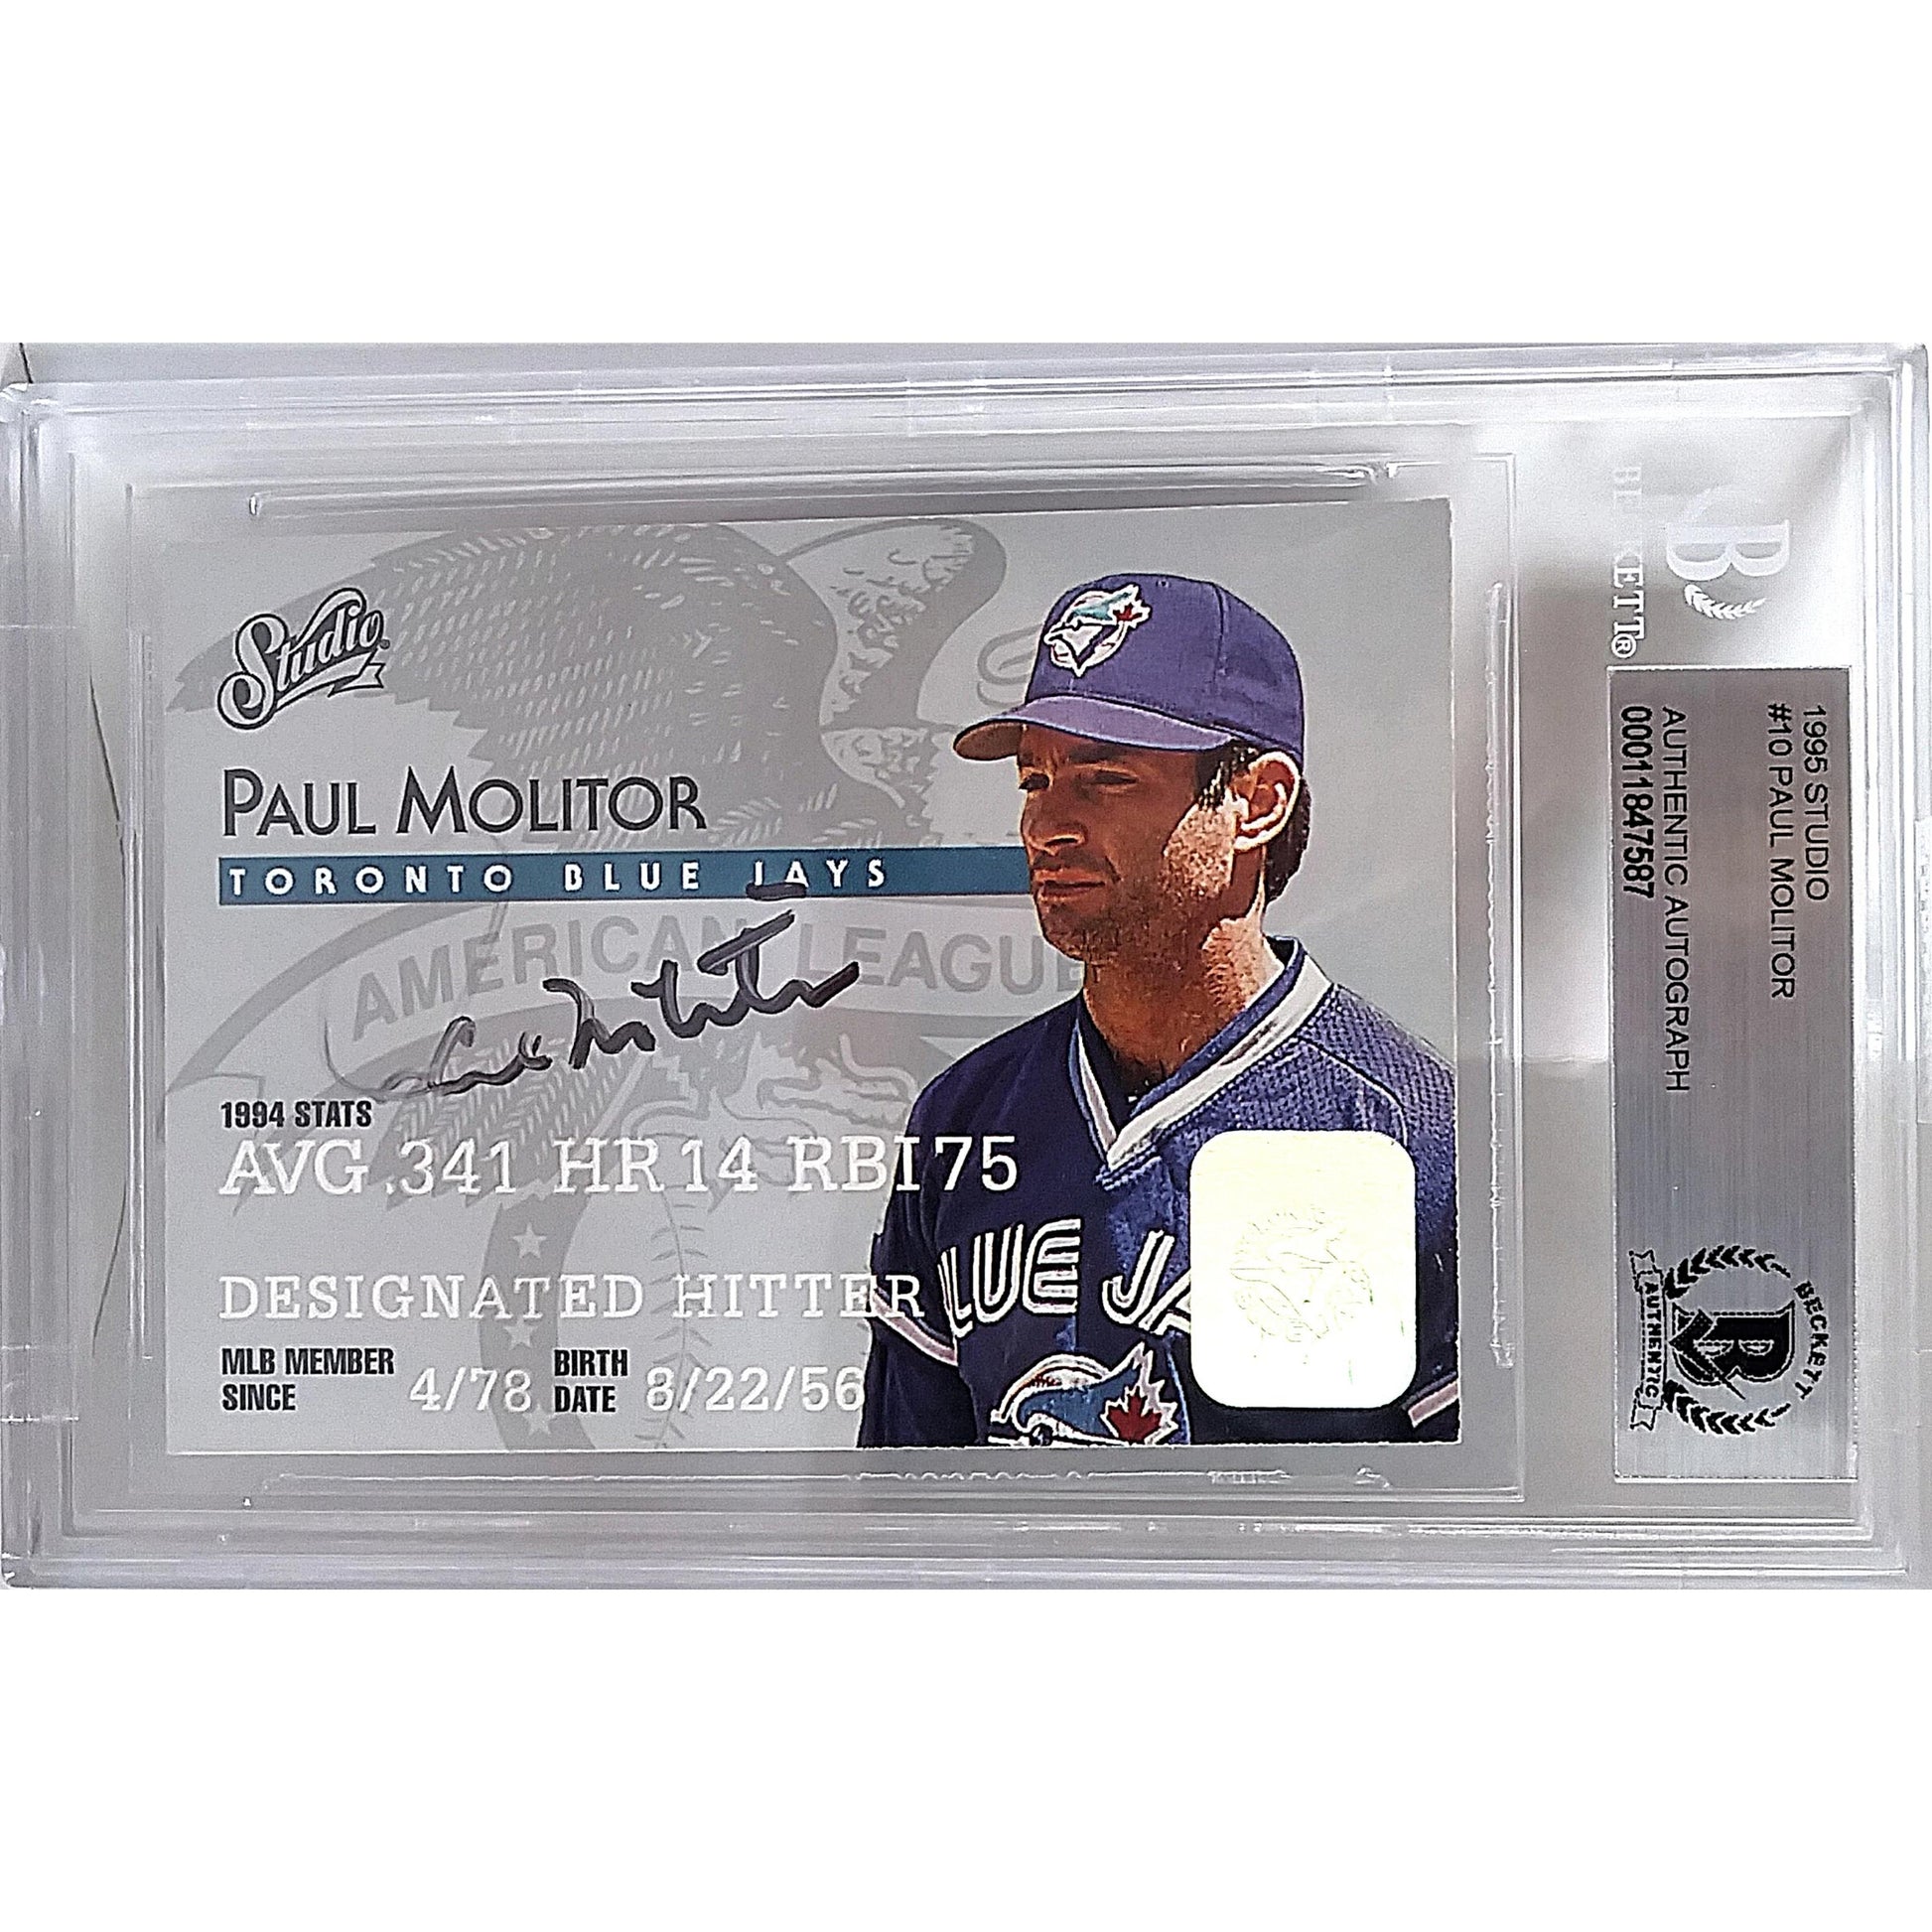 Baseballs- Autographed- Paul Molitor Signed Toronto Blue Jays 1995 Studio Base Set Baseball Trading Card - Beckett BGS BAS Slabbed - Encapsulated - 101a